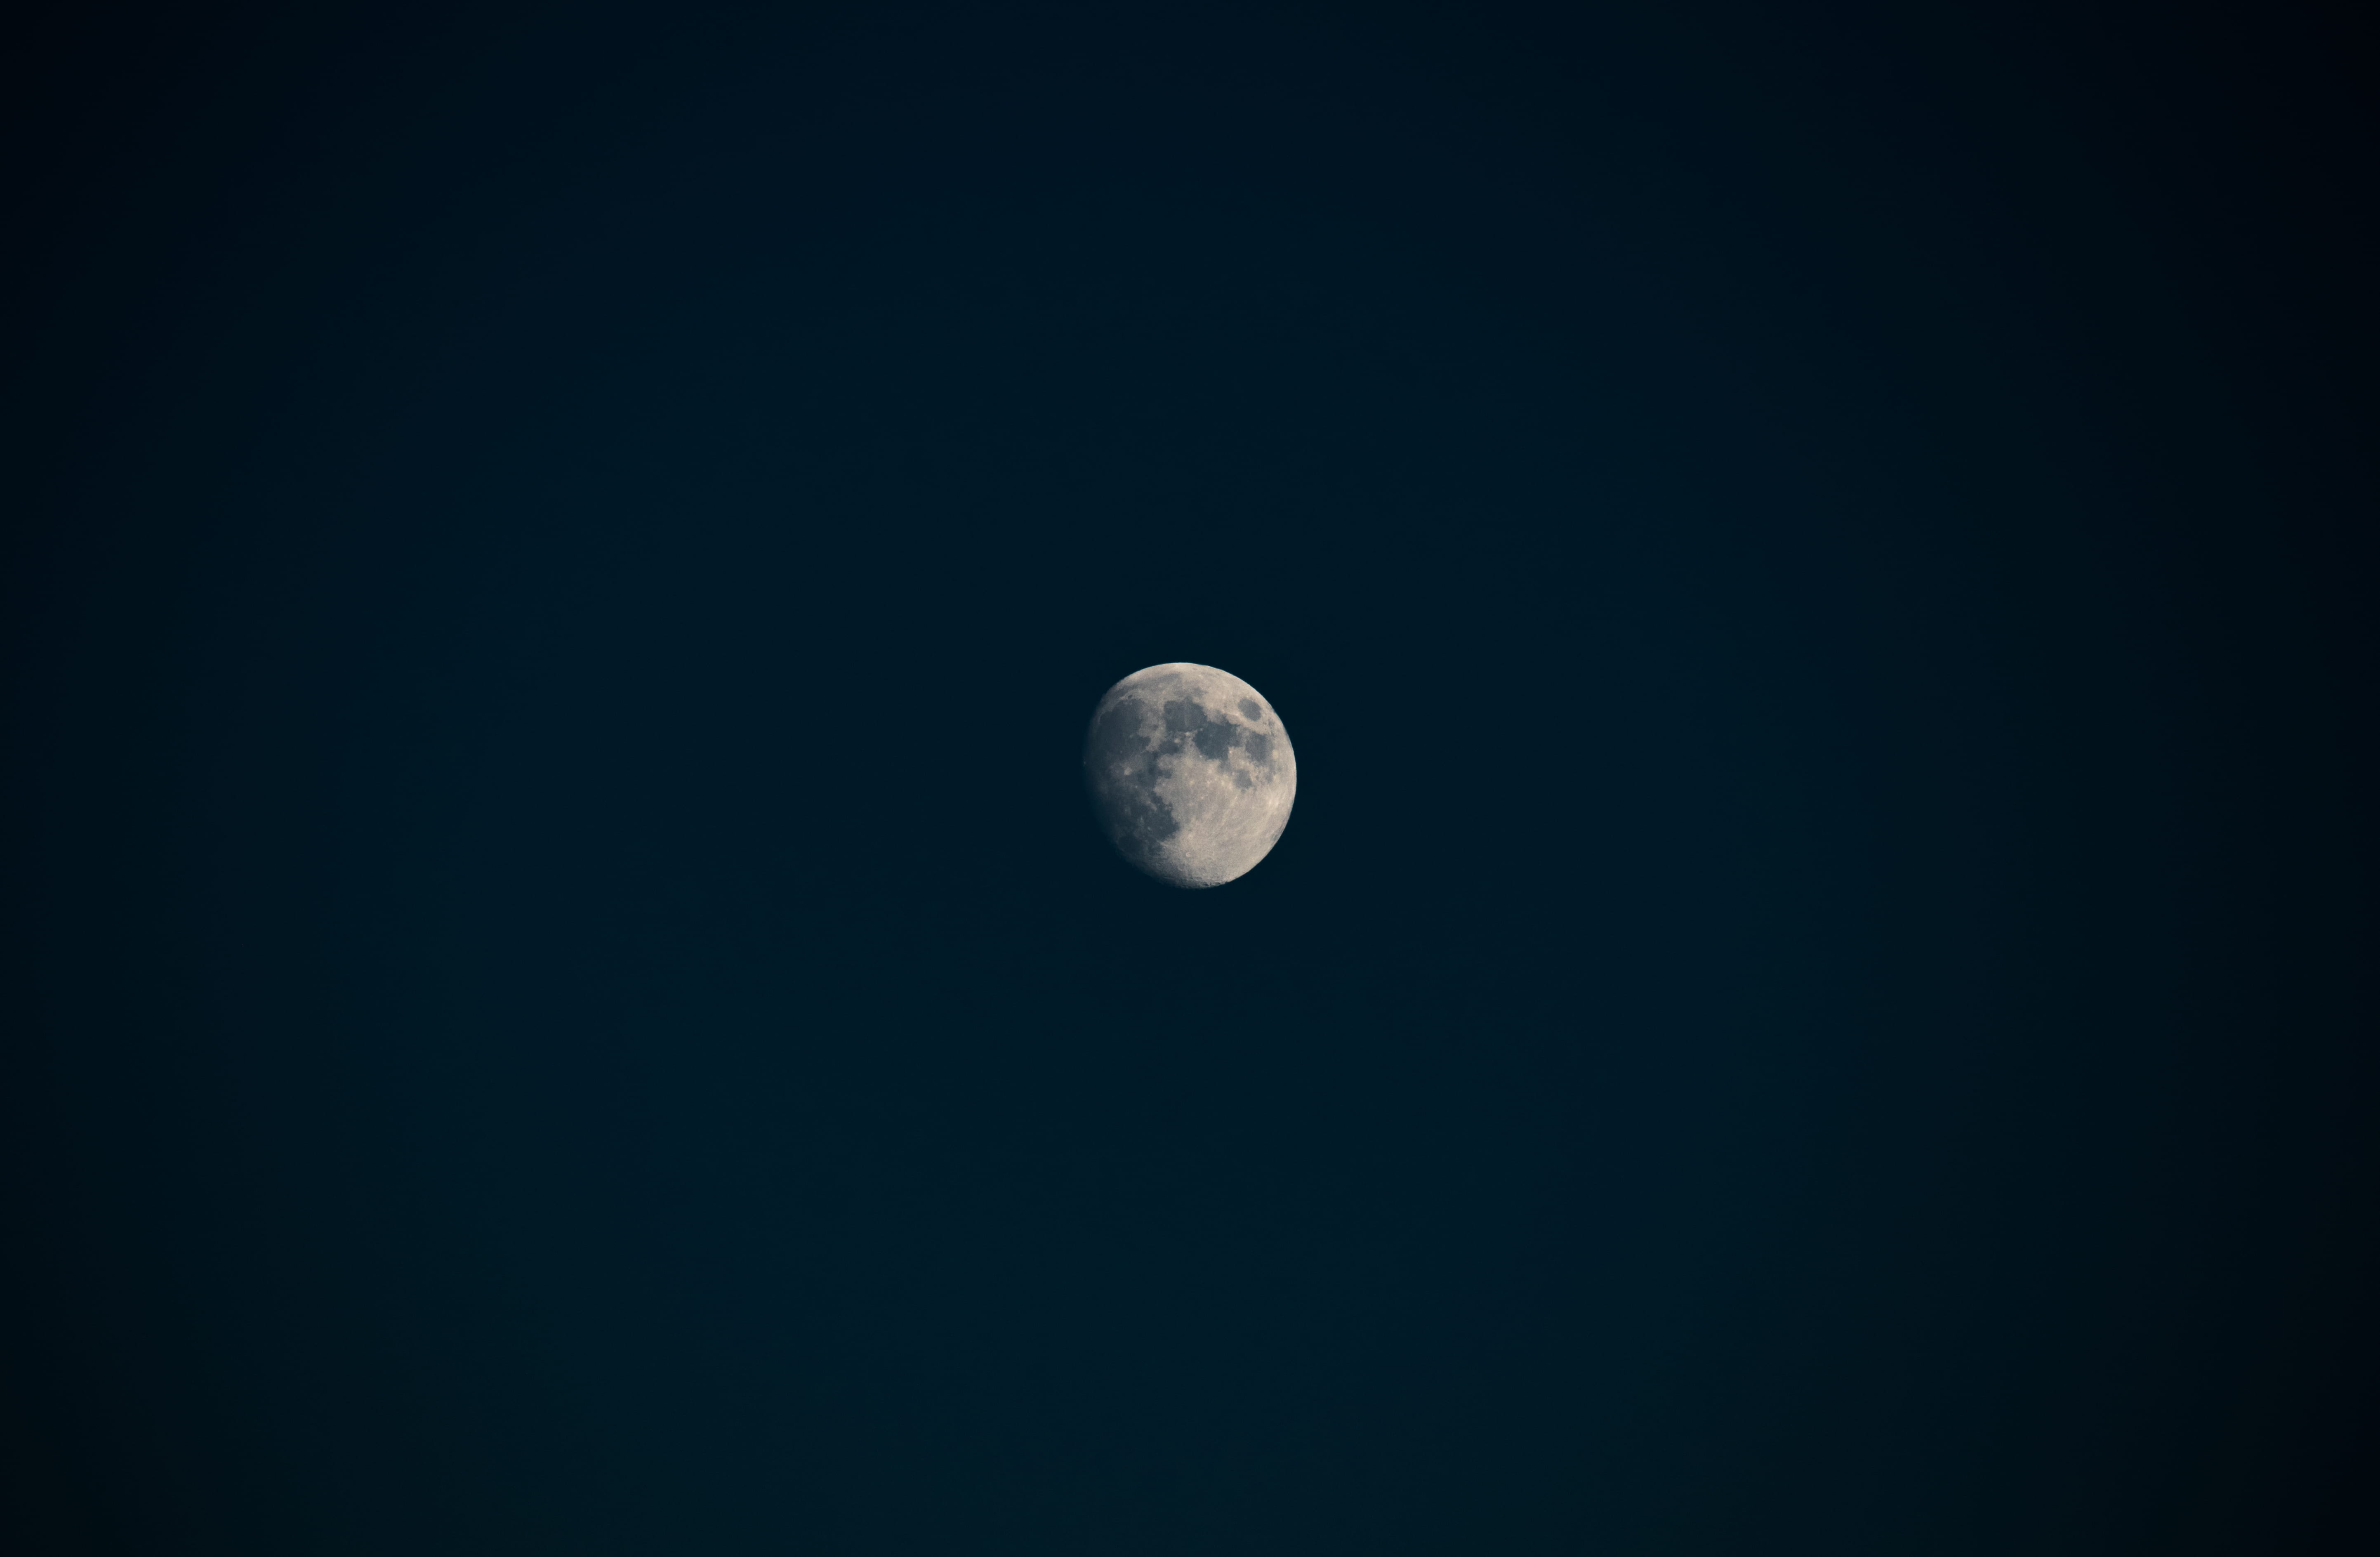 gray and blue planet, simple moon, moon shine, moonlight, dark